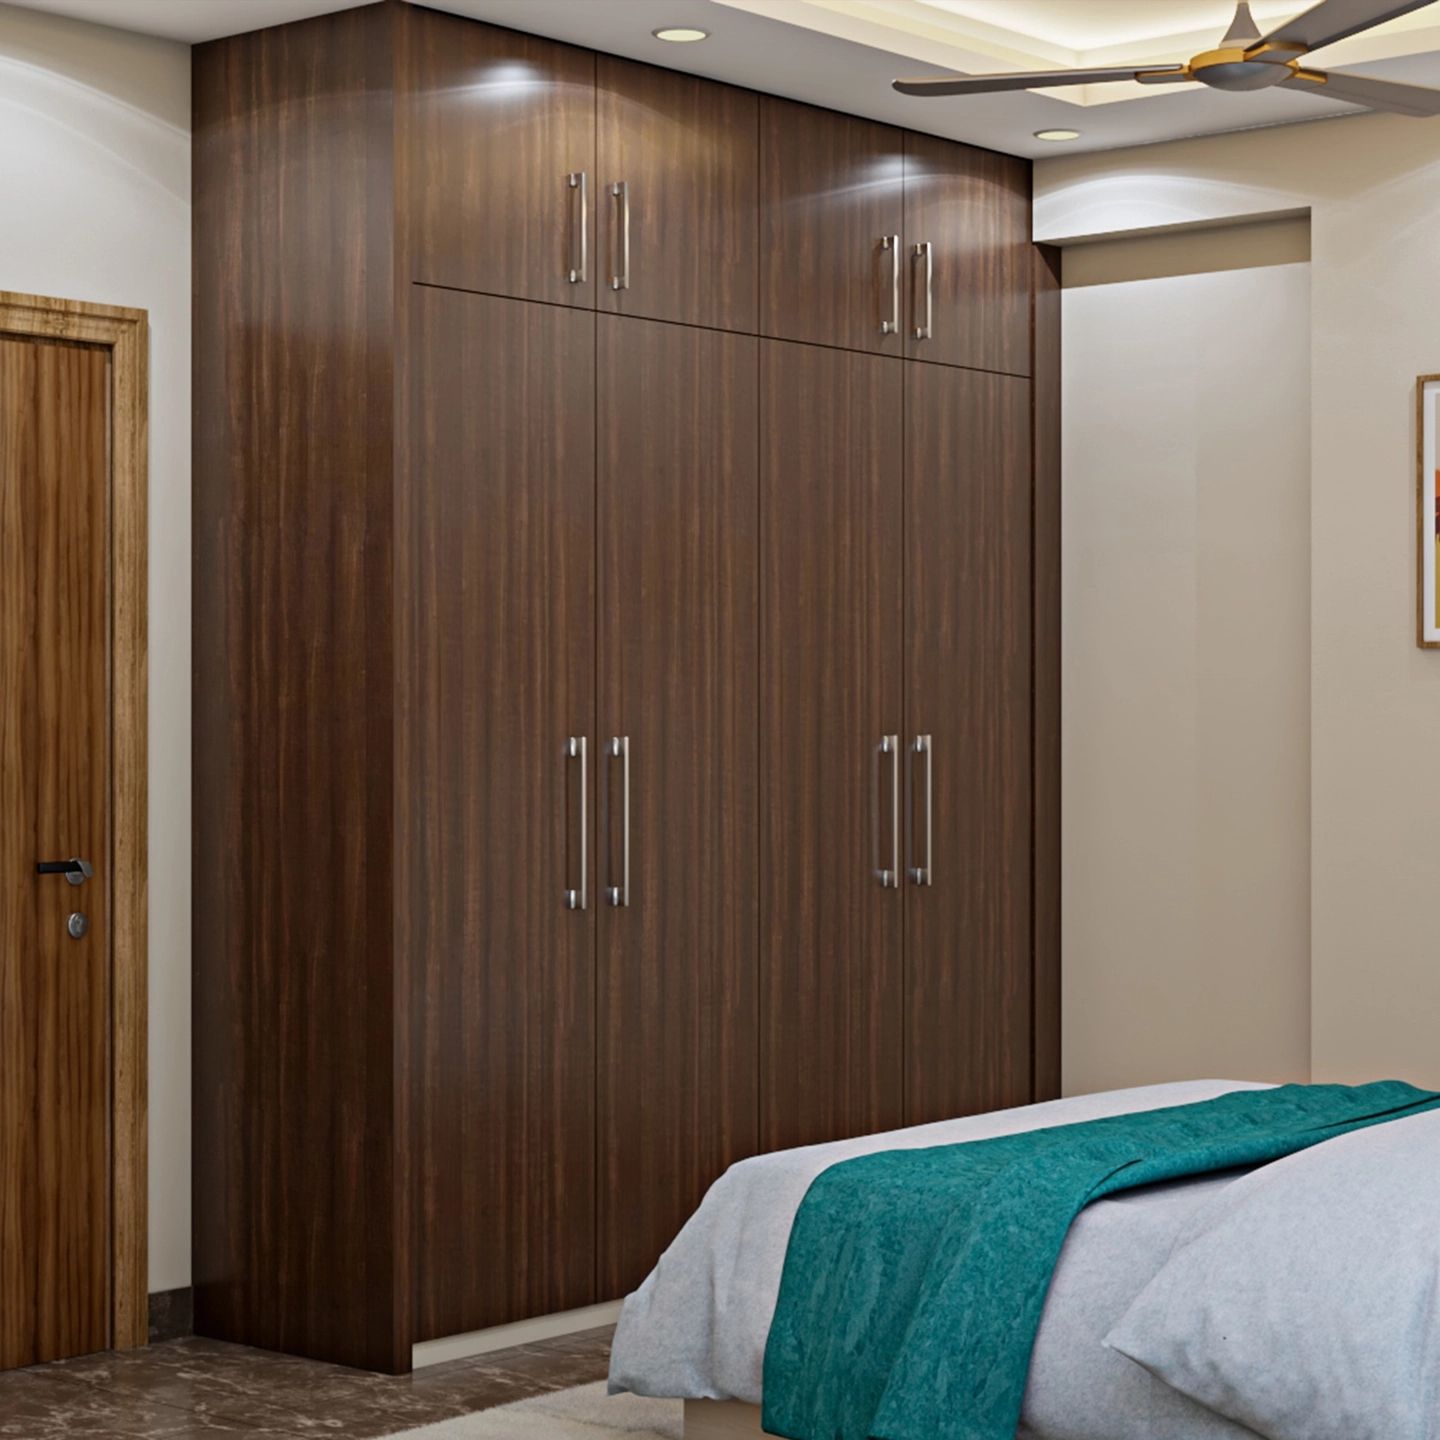 Textured Wall Modern Compact Master Bedroom Interior Design Idea - Livspace